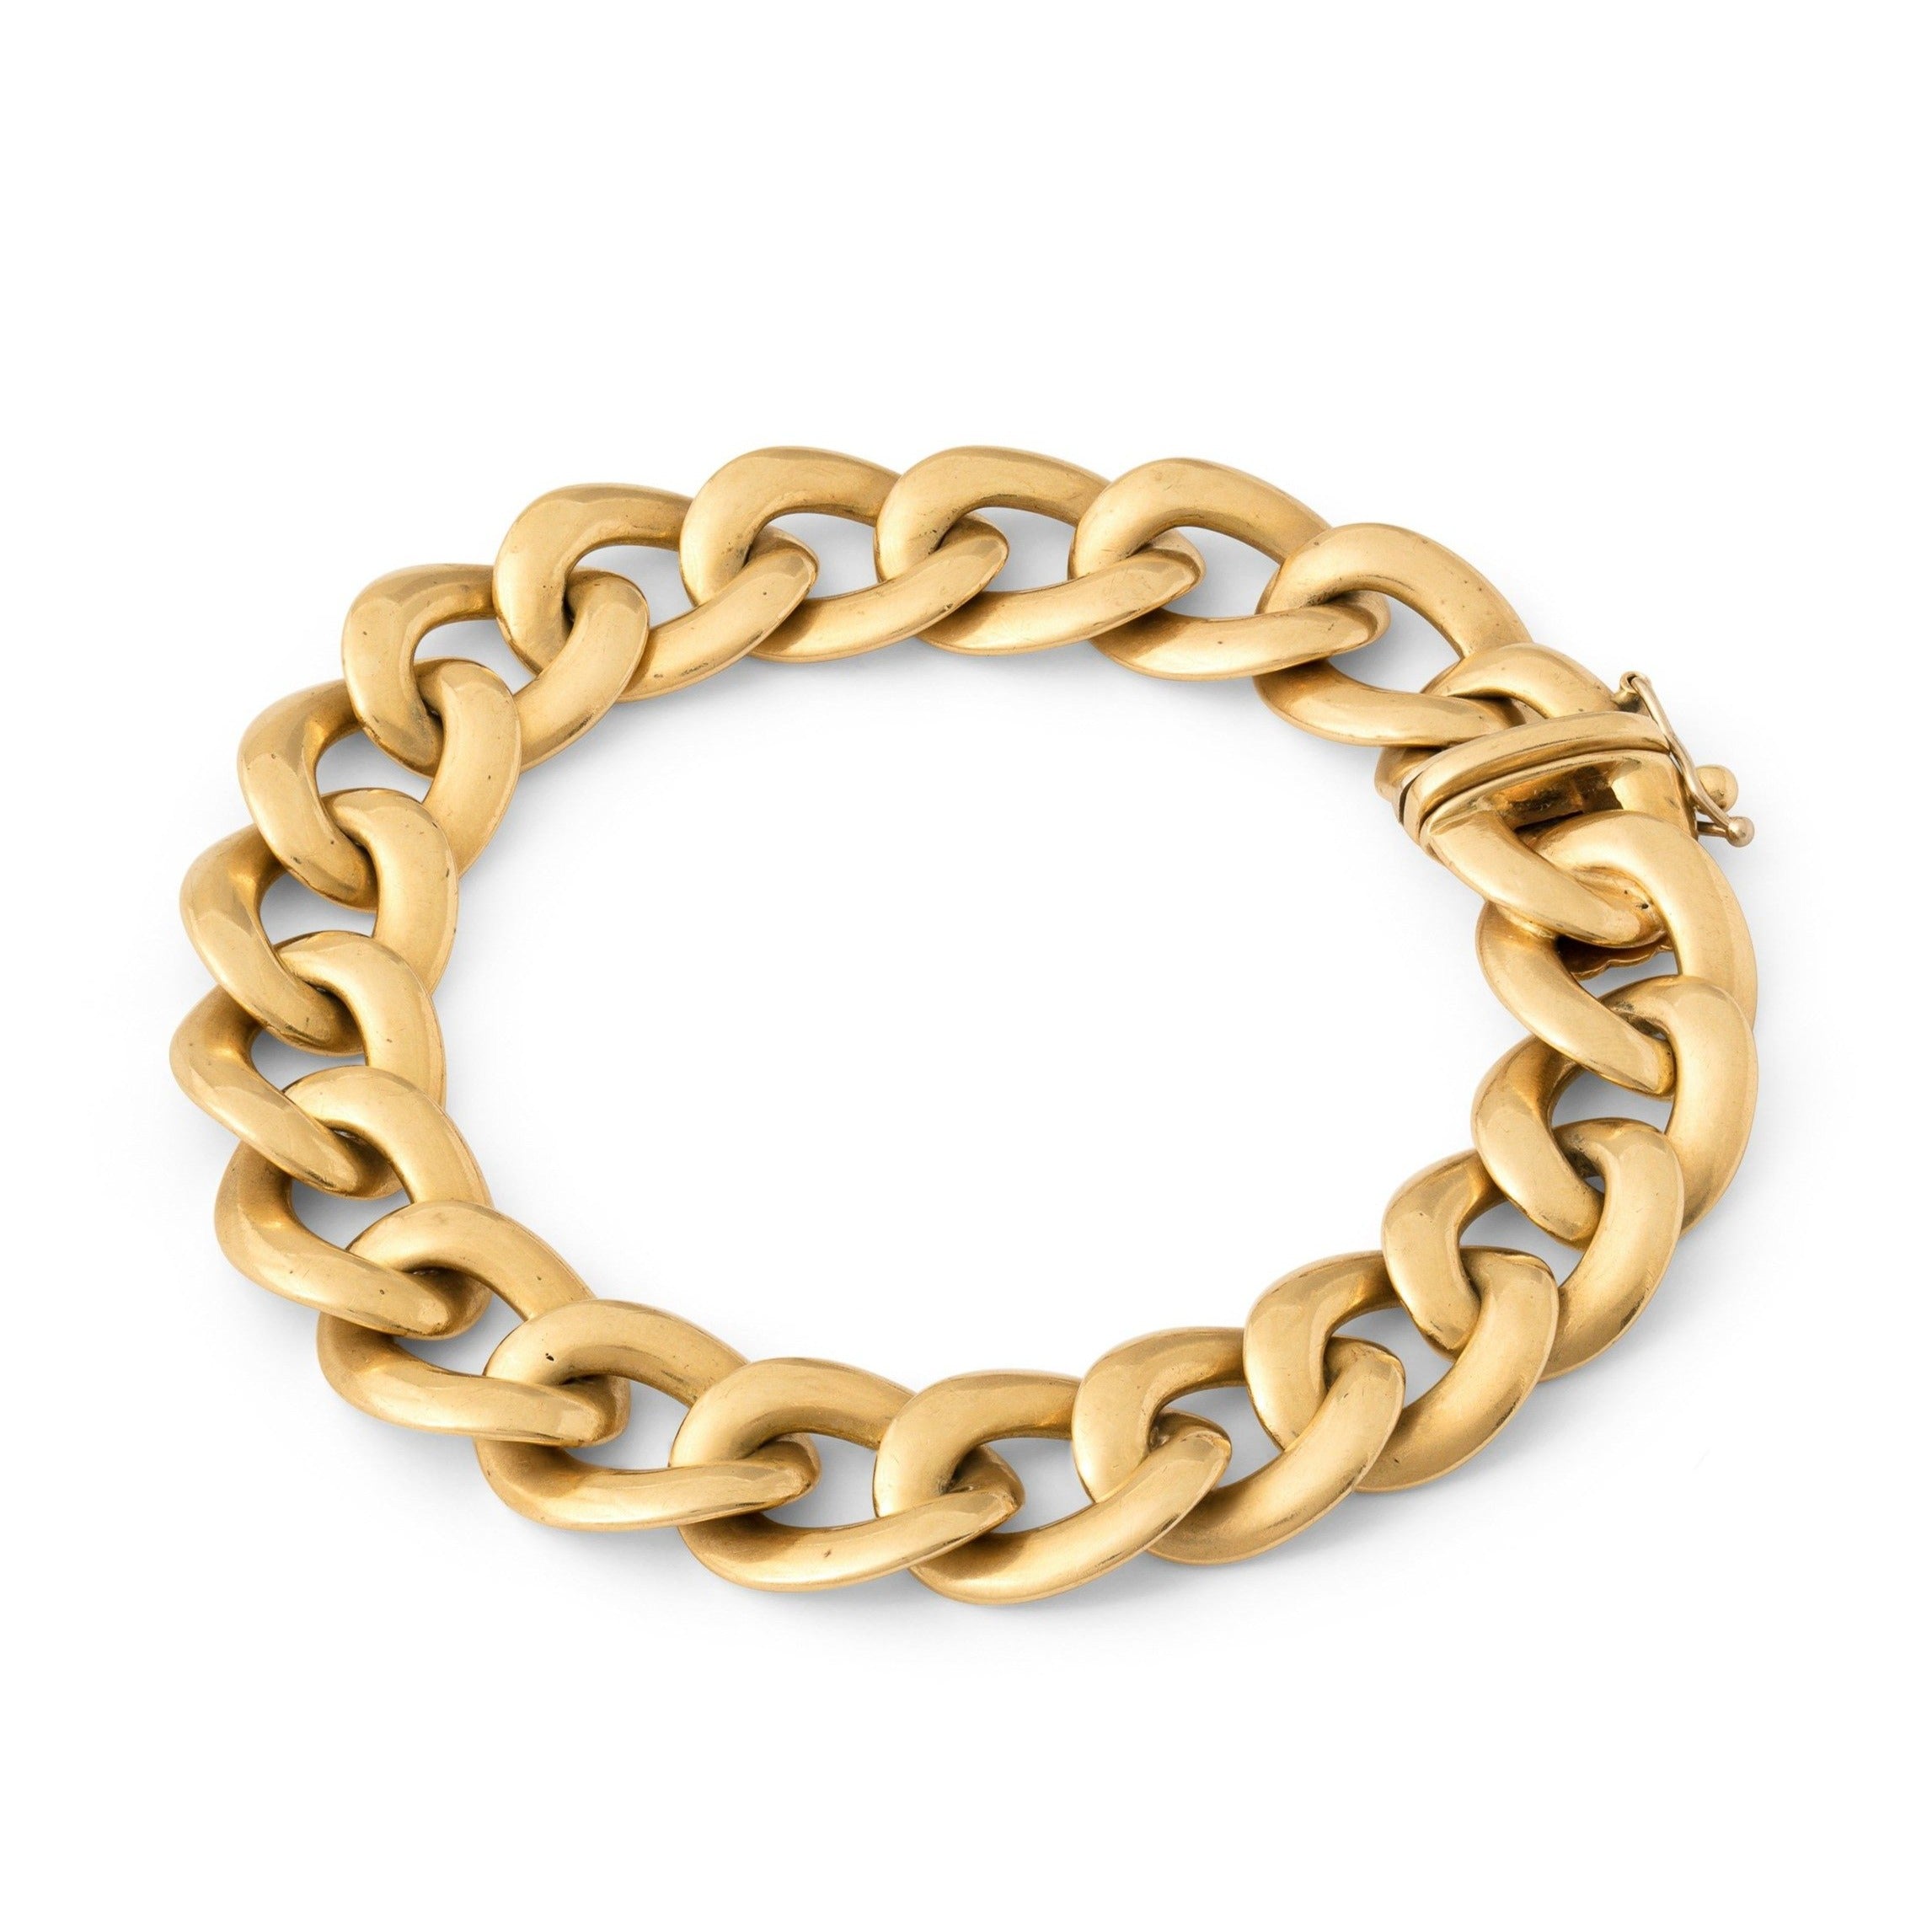 Buy 14K Two Tone Gold Link Bracelet Size 8 Online in India - Etsy